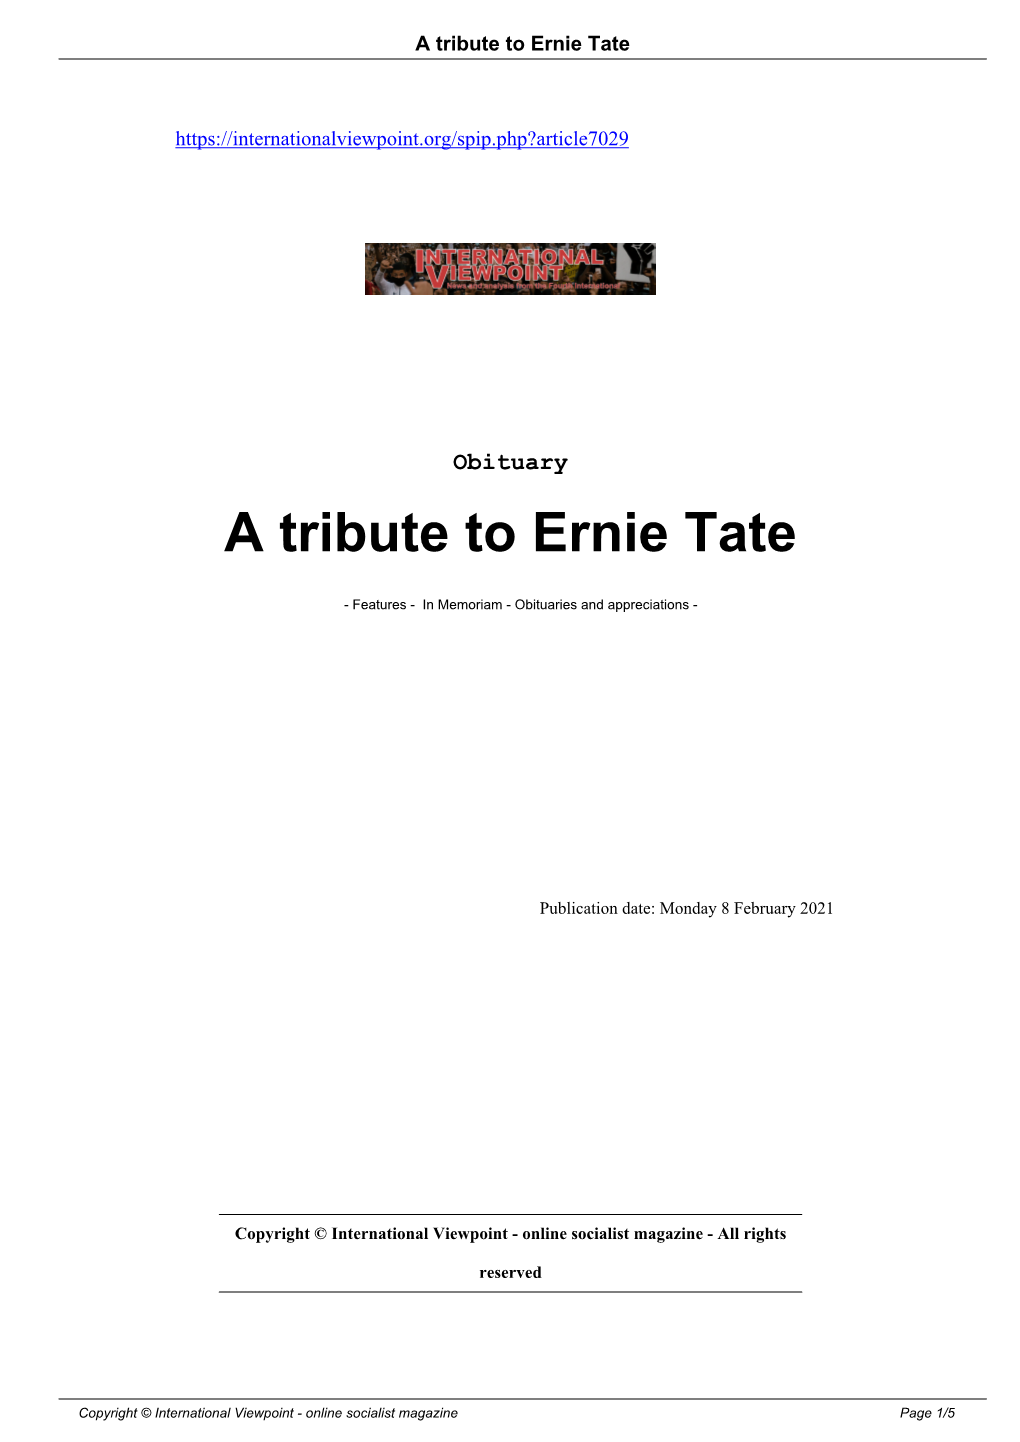 A Tribute to Ernie Tate